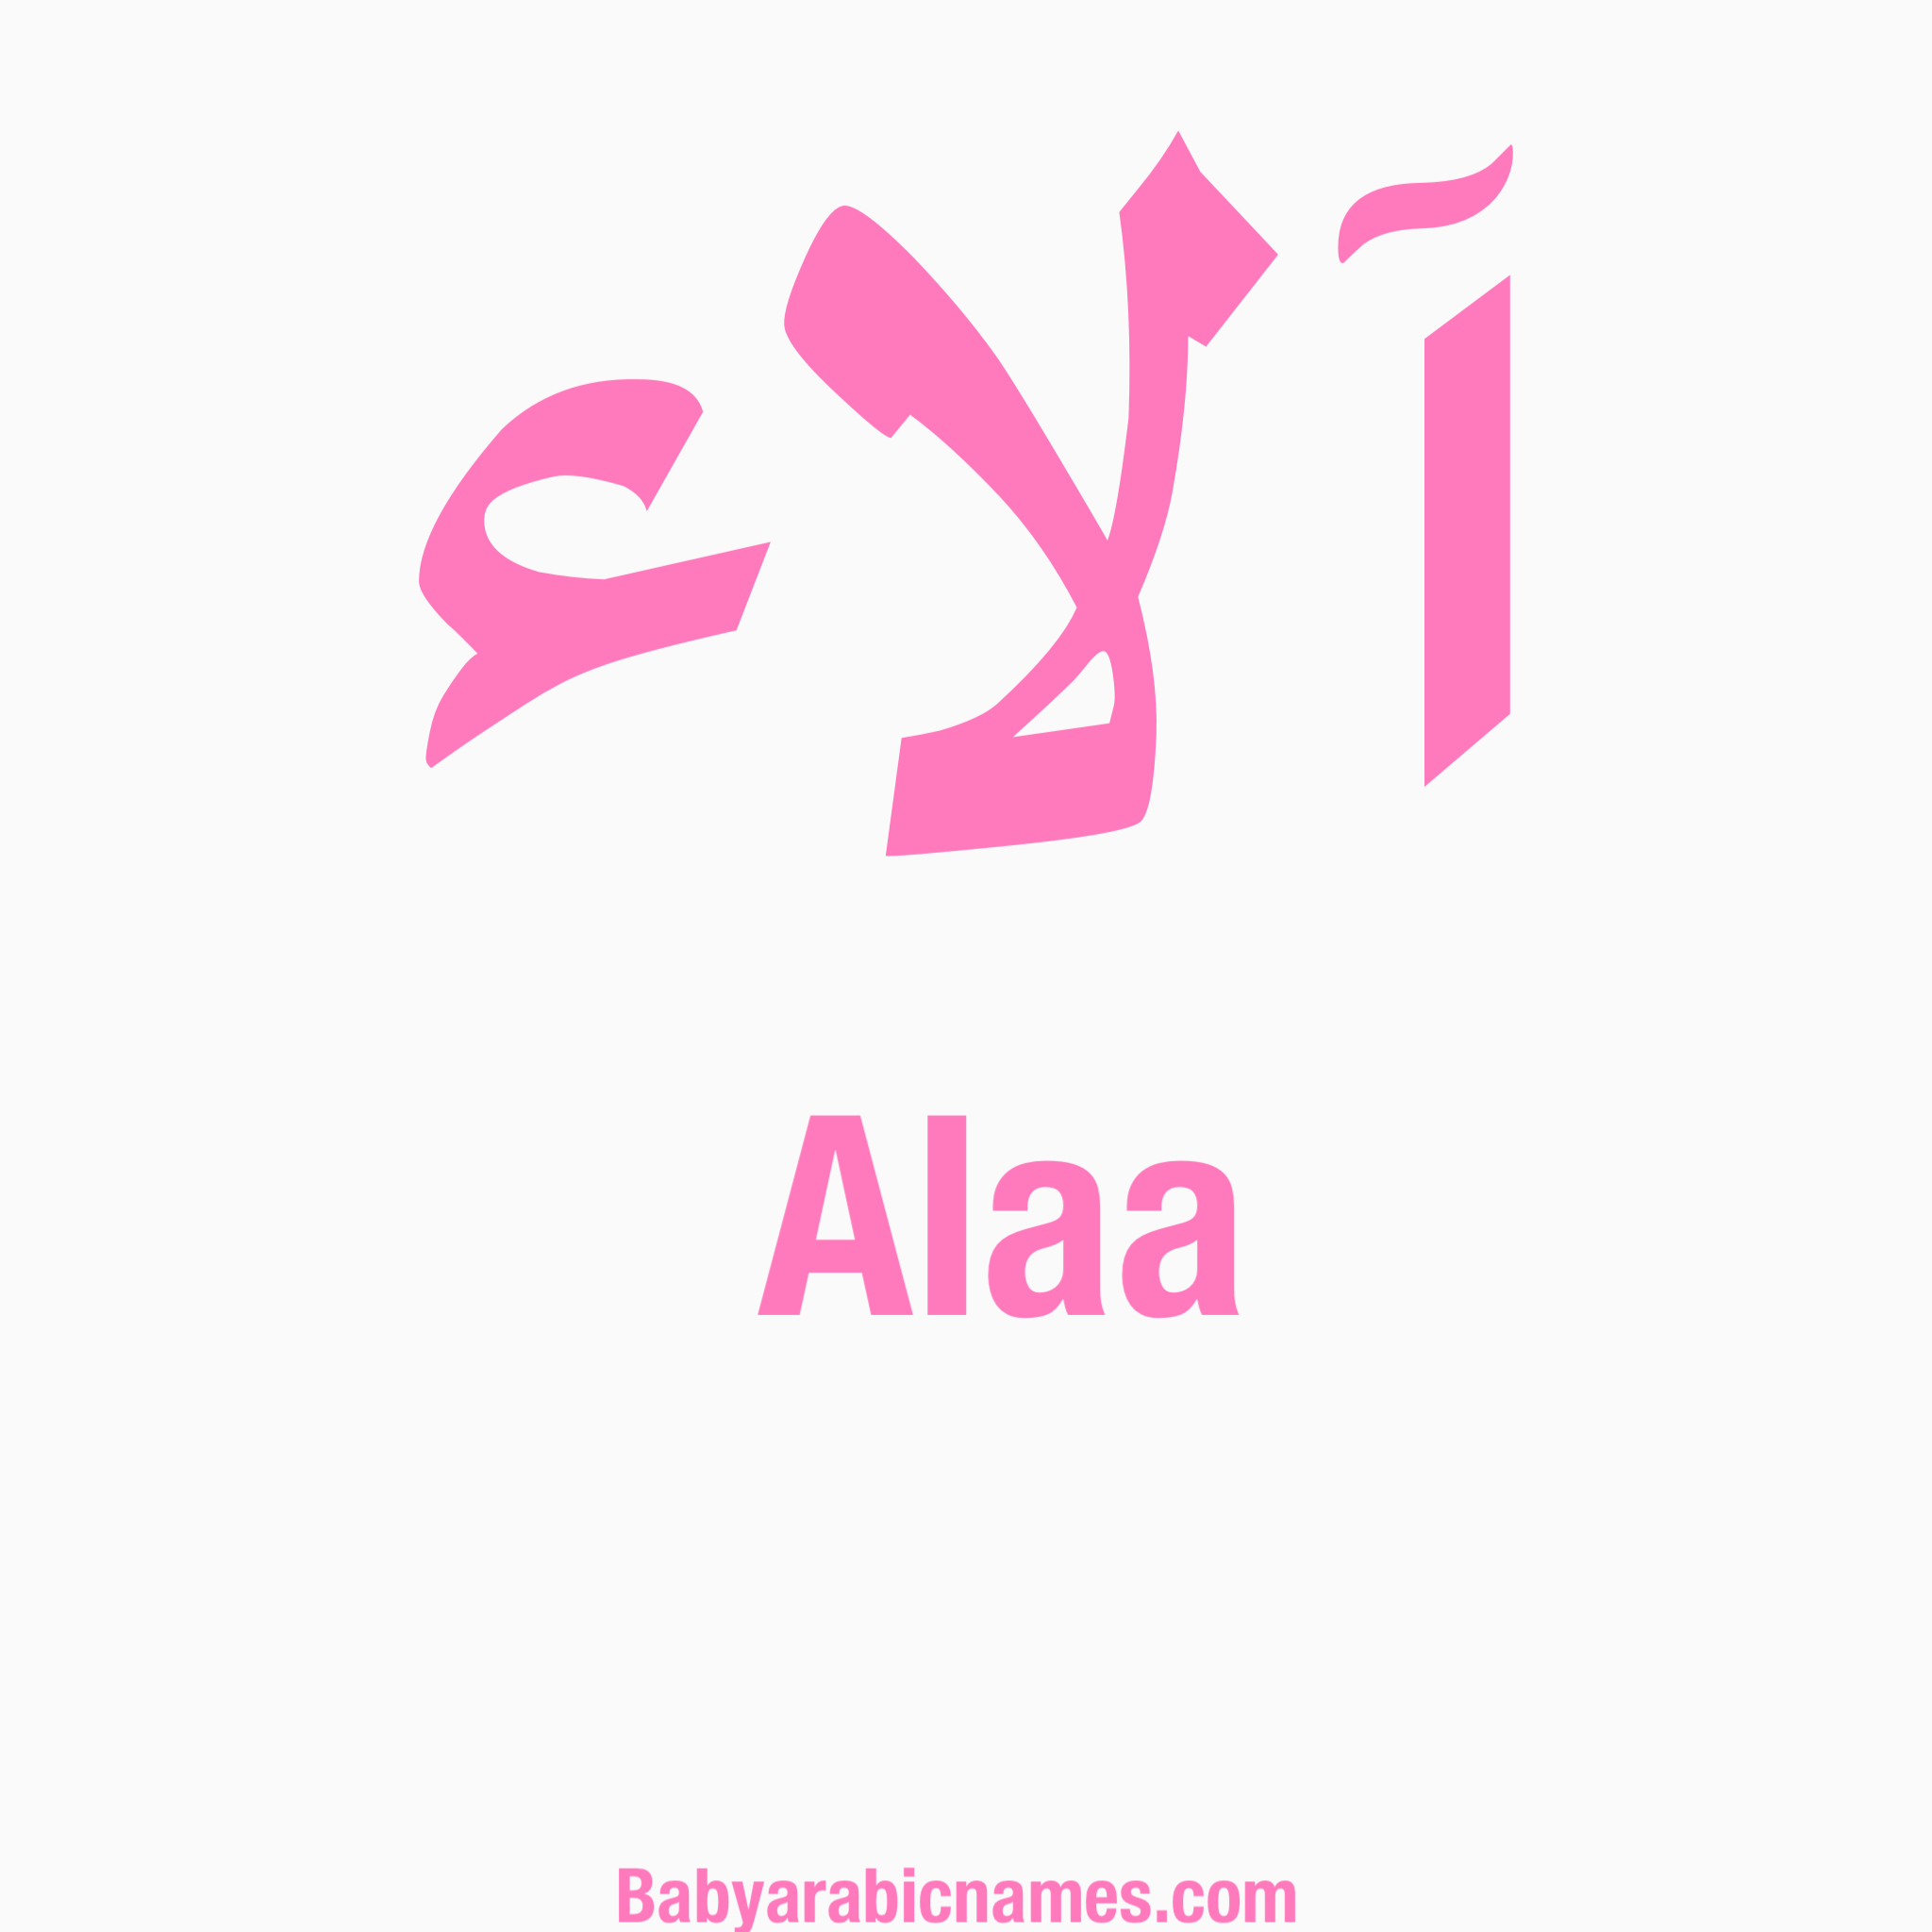 Alaa Arabic Baby Girl Name - آلاء - Baby Arabic Names